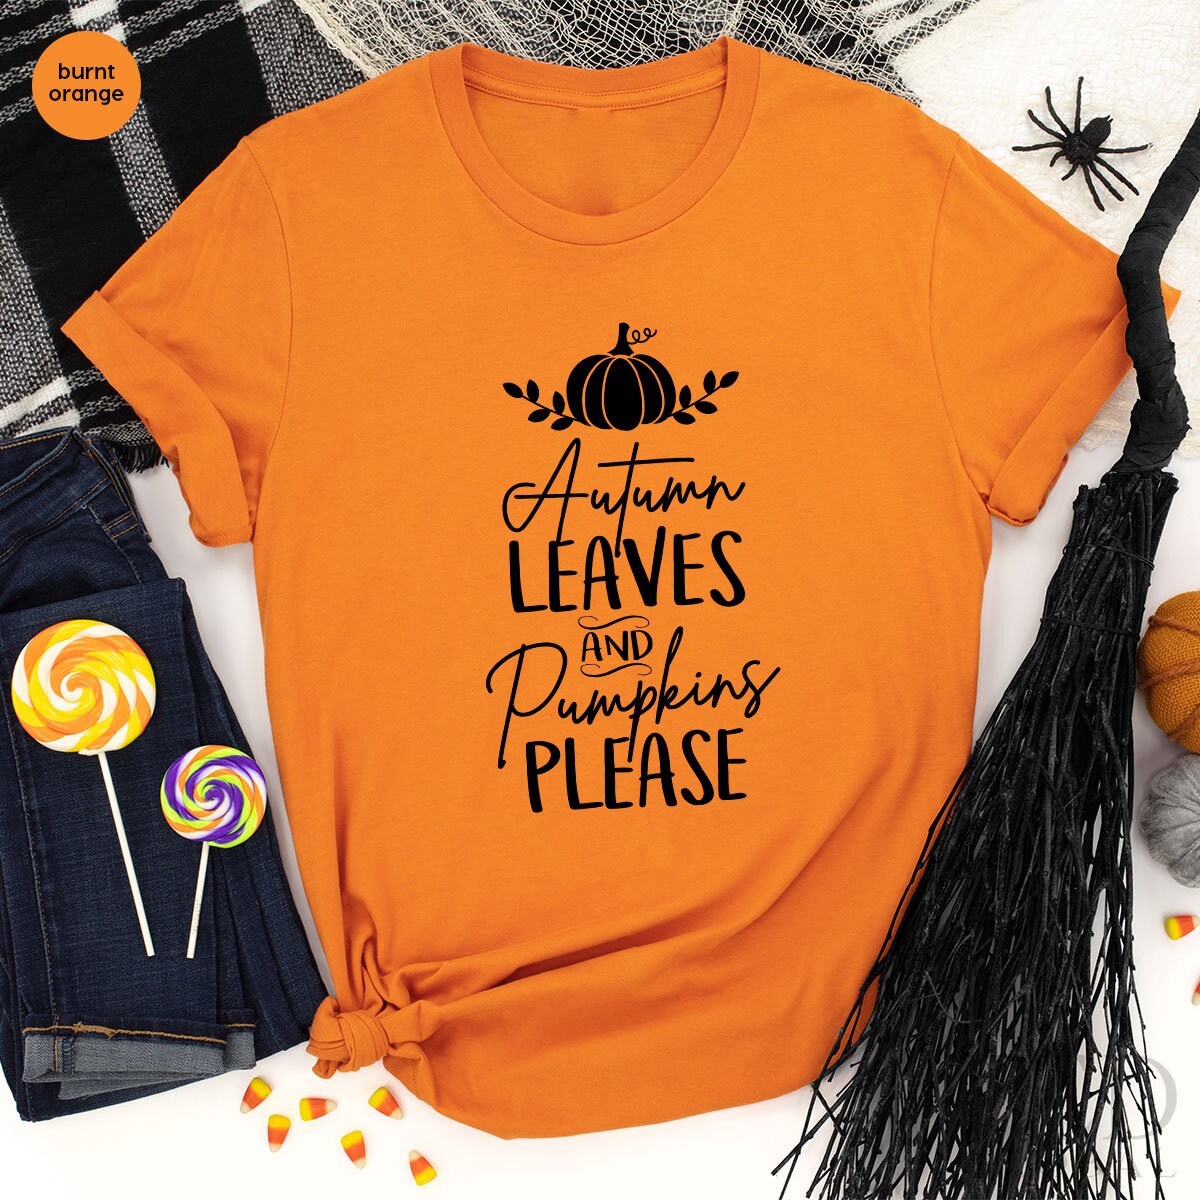 Thanksgiving T-Shirt, Leaves And Pumpkins Please T Shirt, Fall Women Shirts, Family Fall Shirt, Pumpkin TShirt, Gift For Thanksgiving - Fastdeliverytees.com